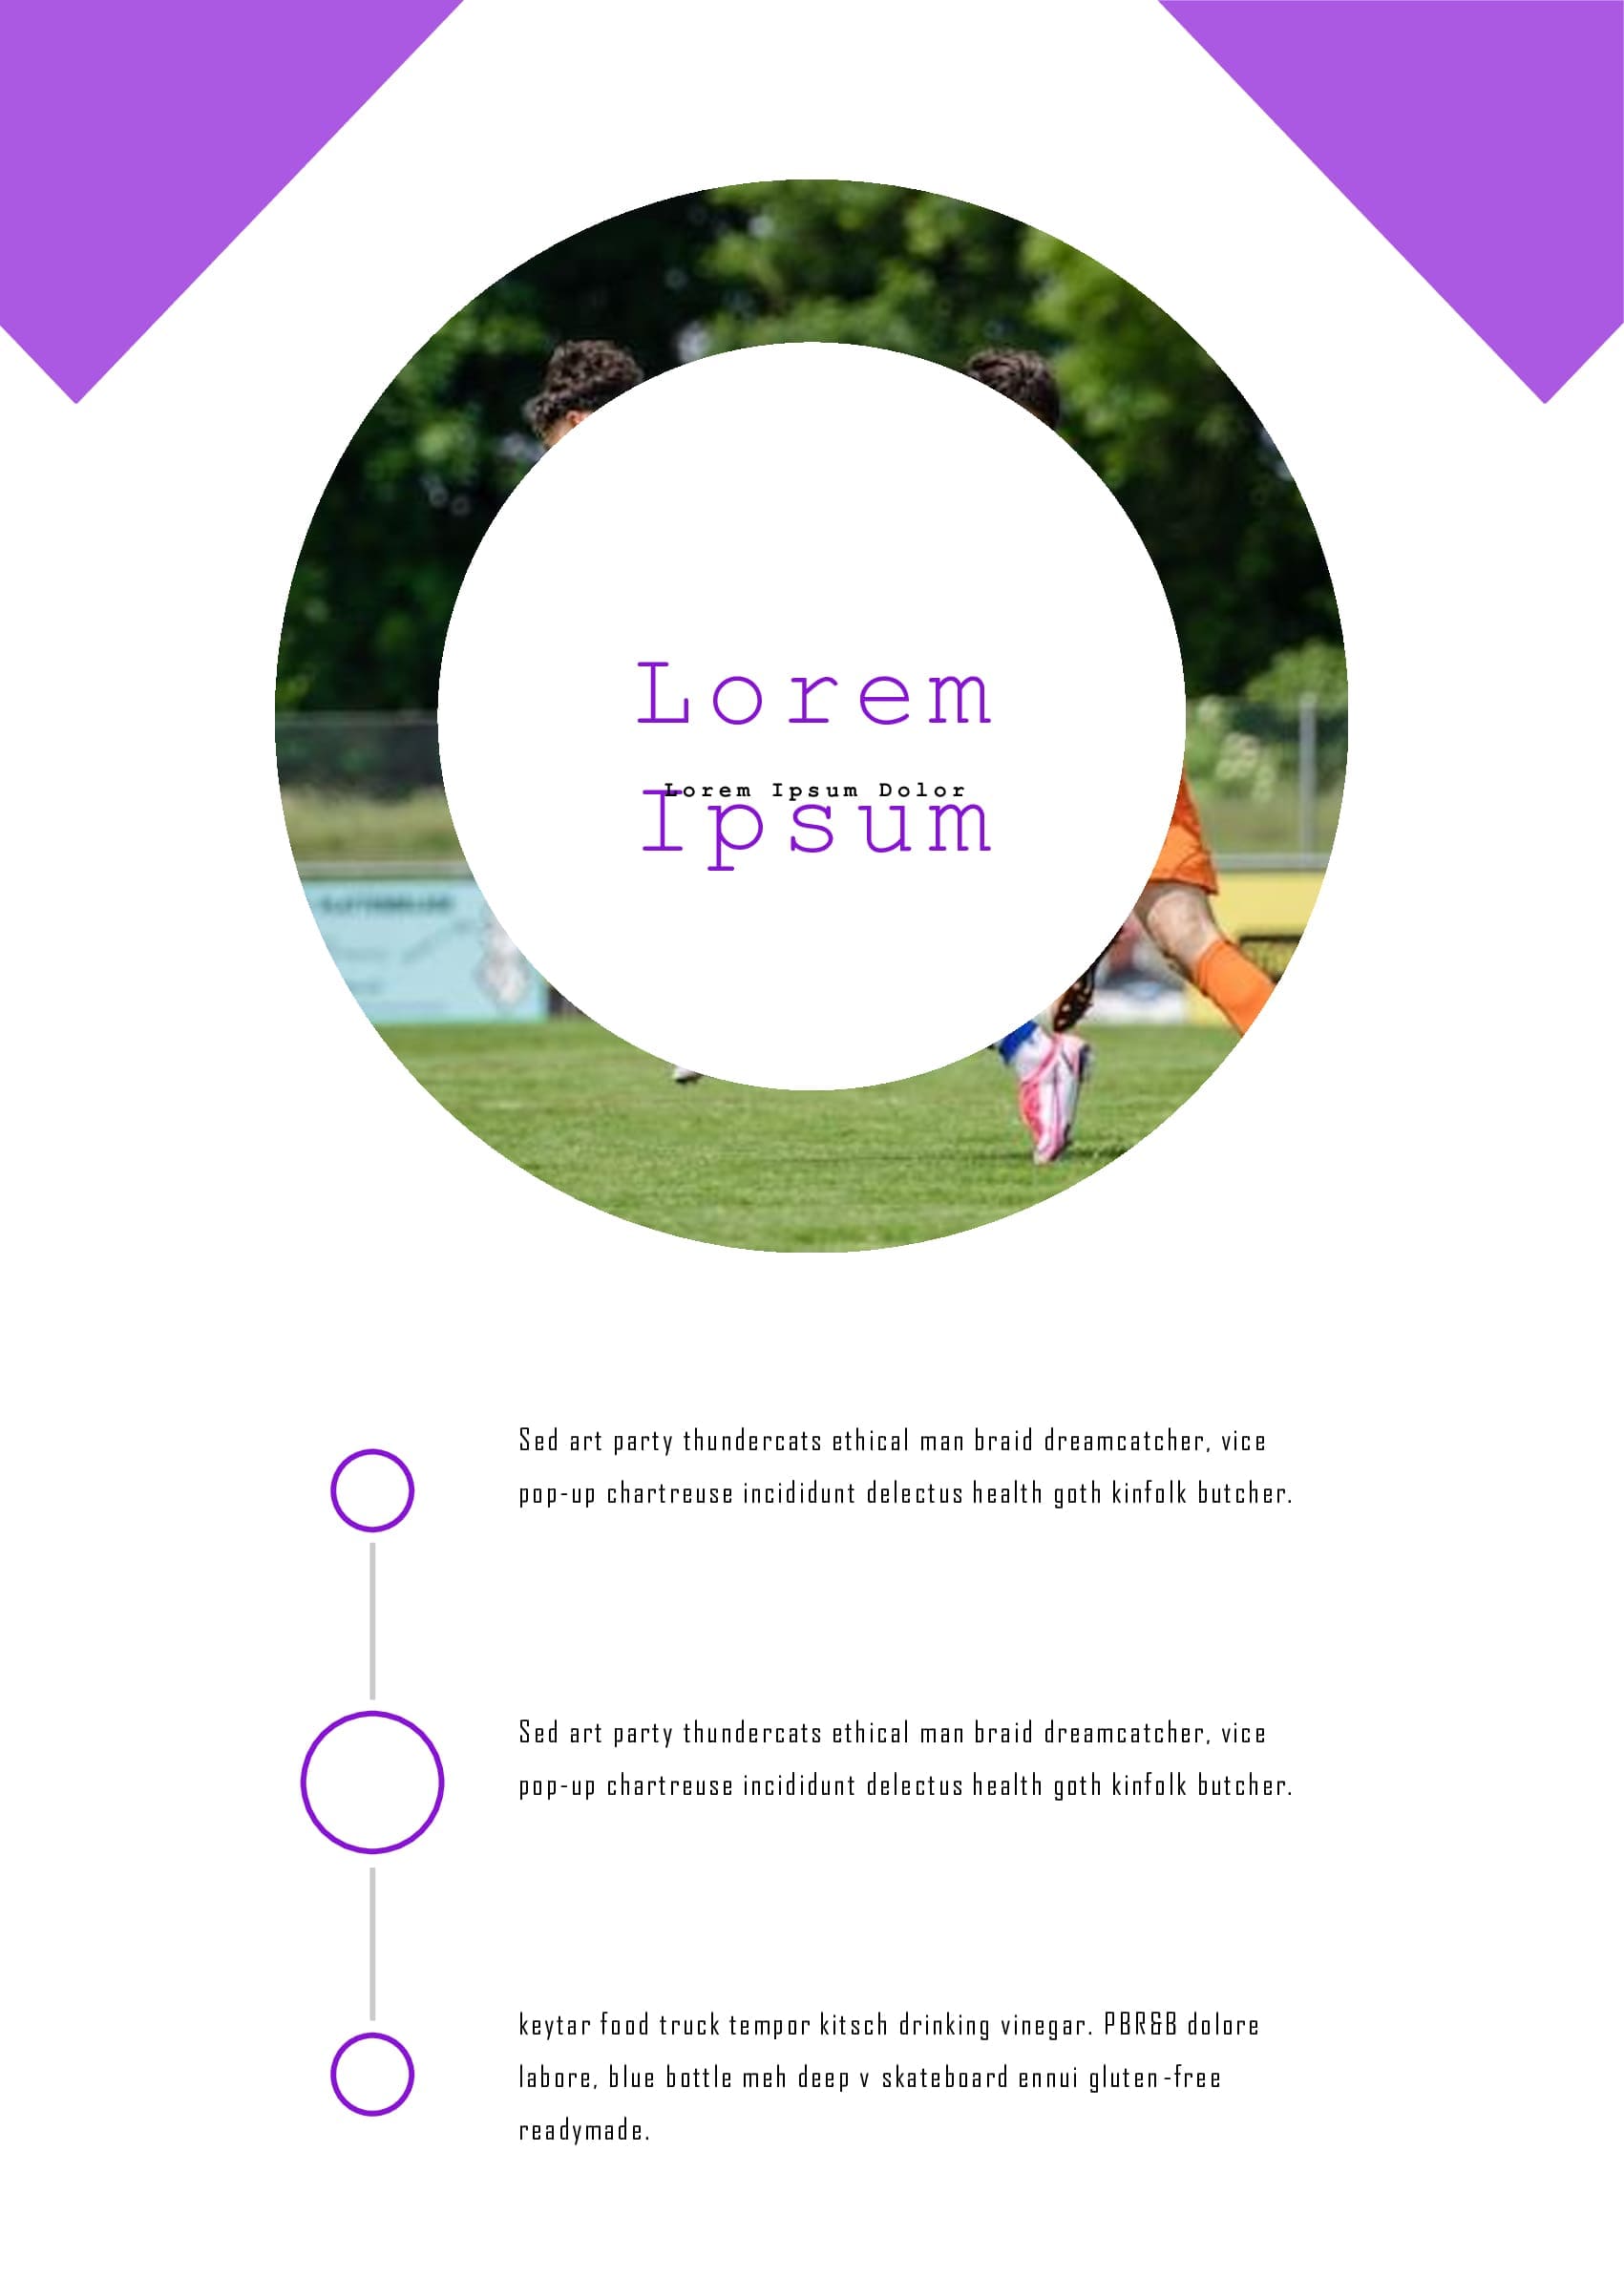 Inscription "Lorem ipsum".